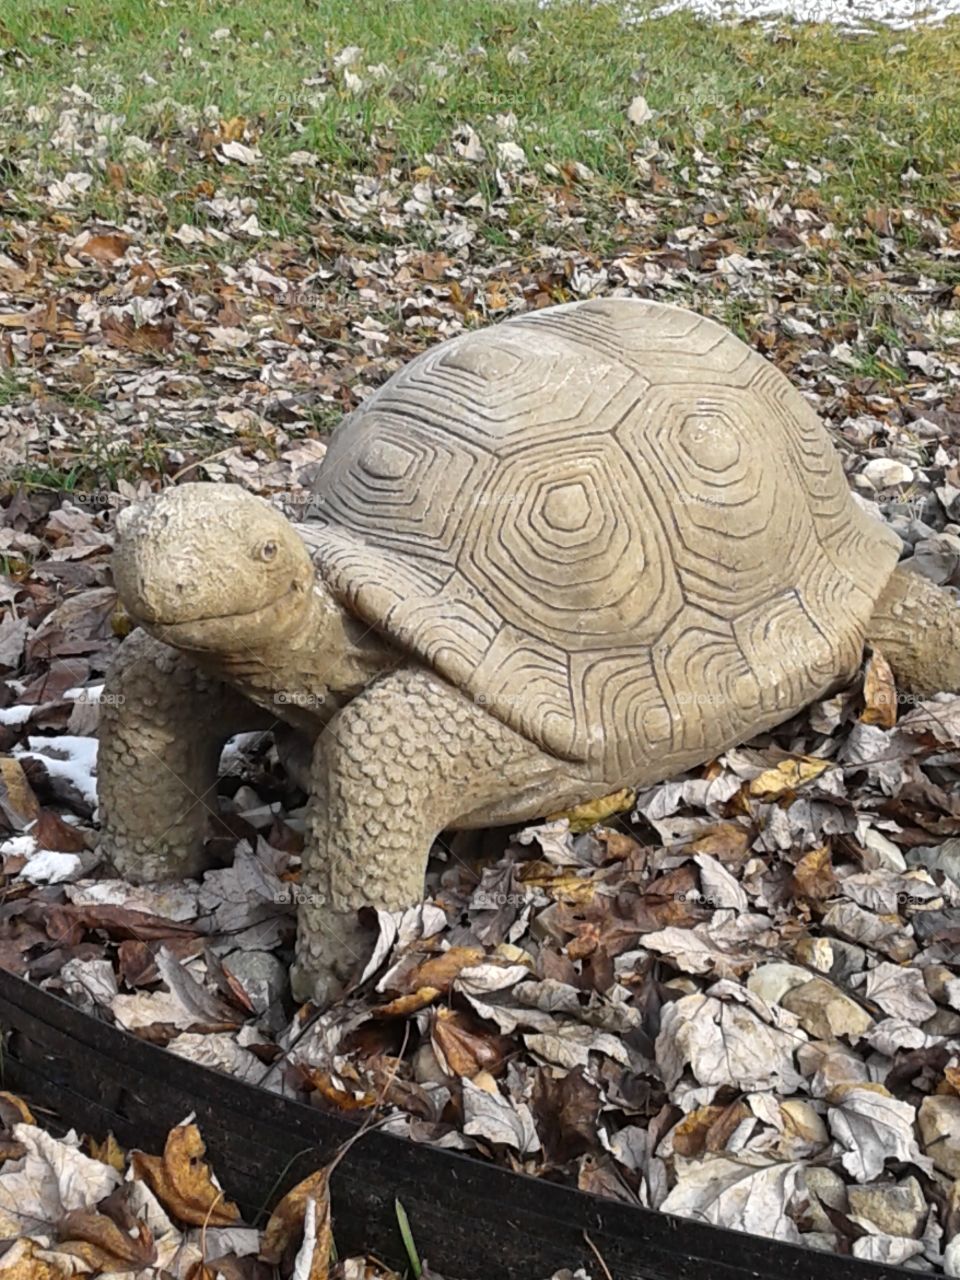 What a beautiful tortoise statue!